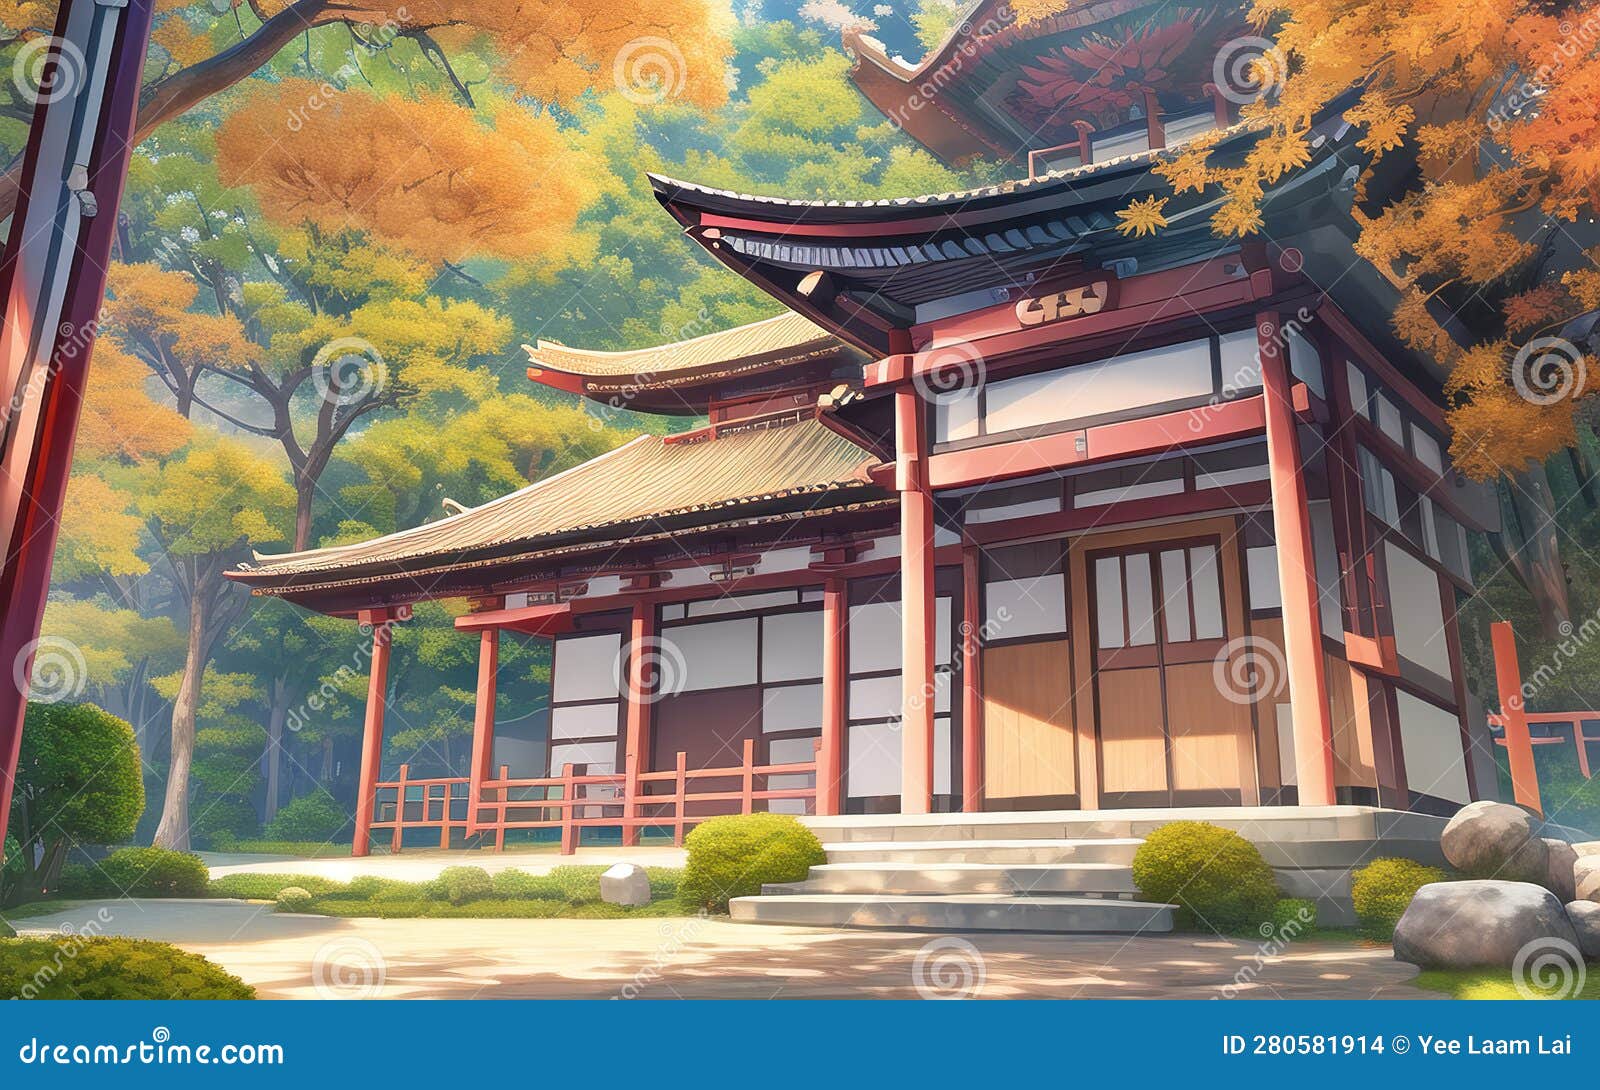 Outset Temple - A Dreamy Anime Artwork